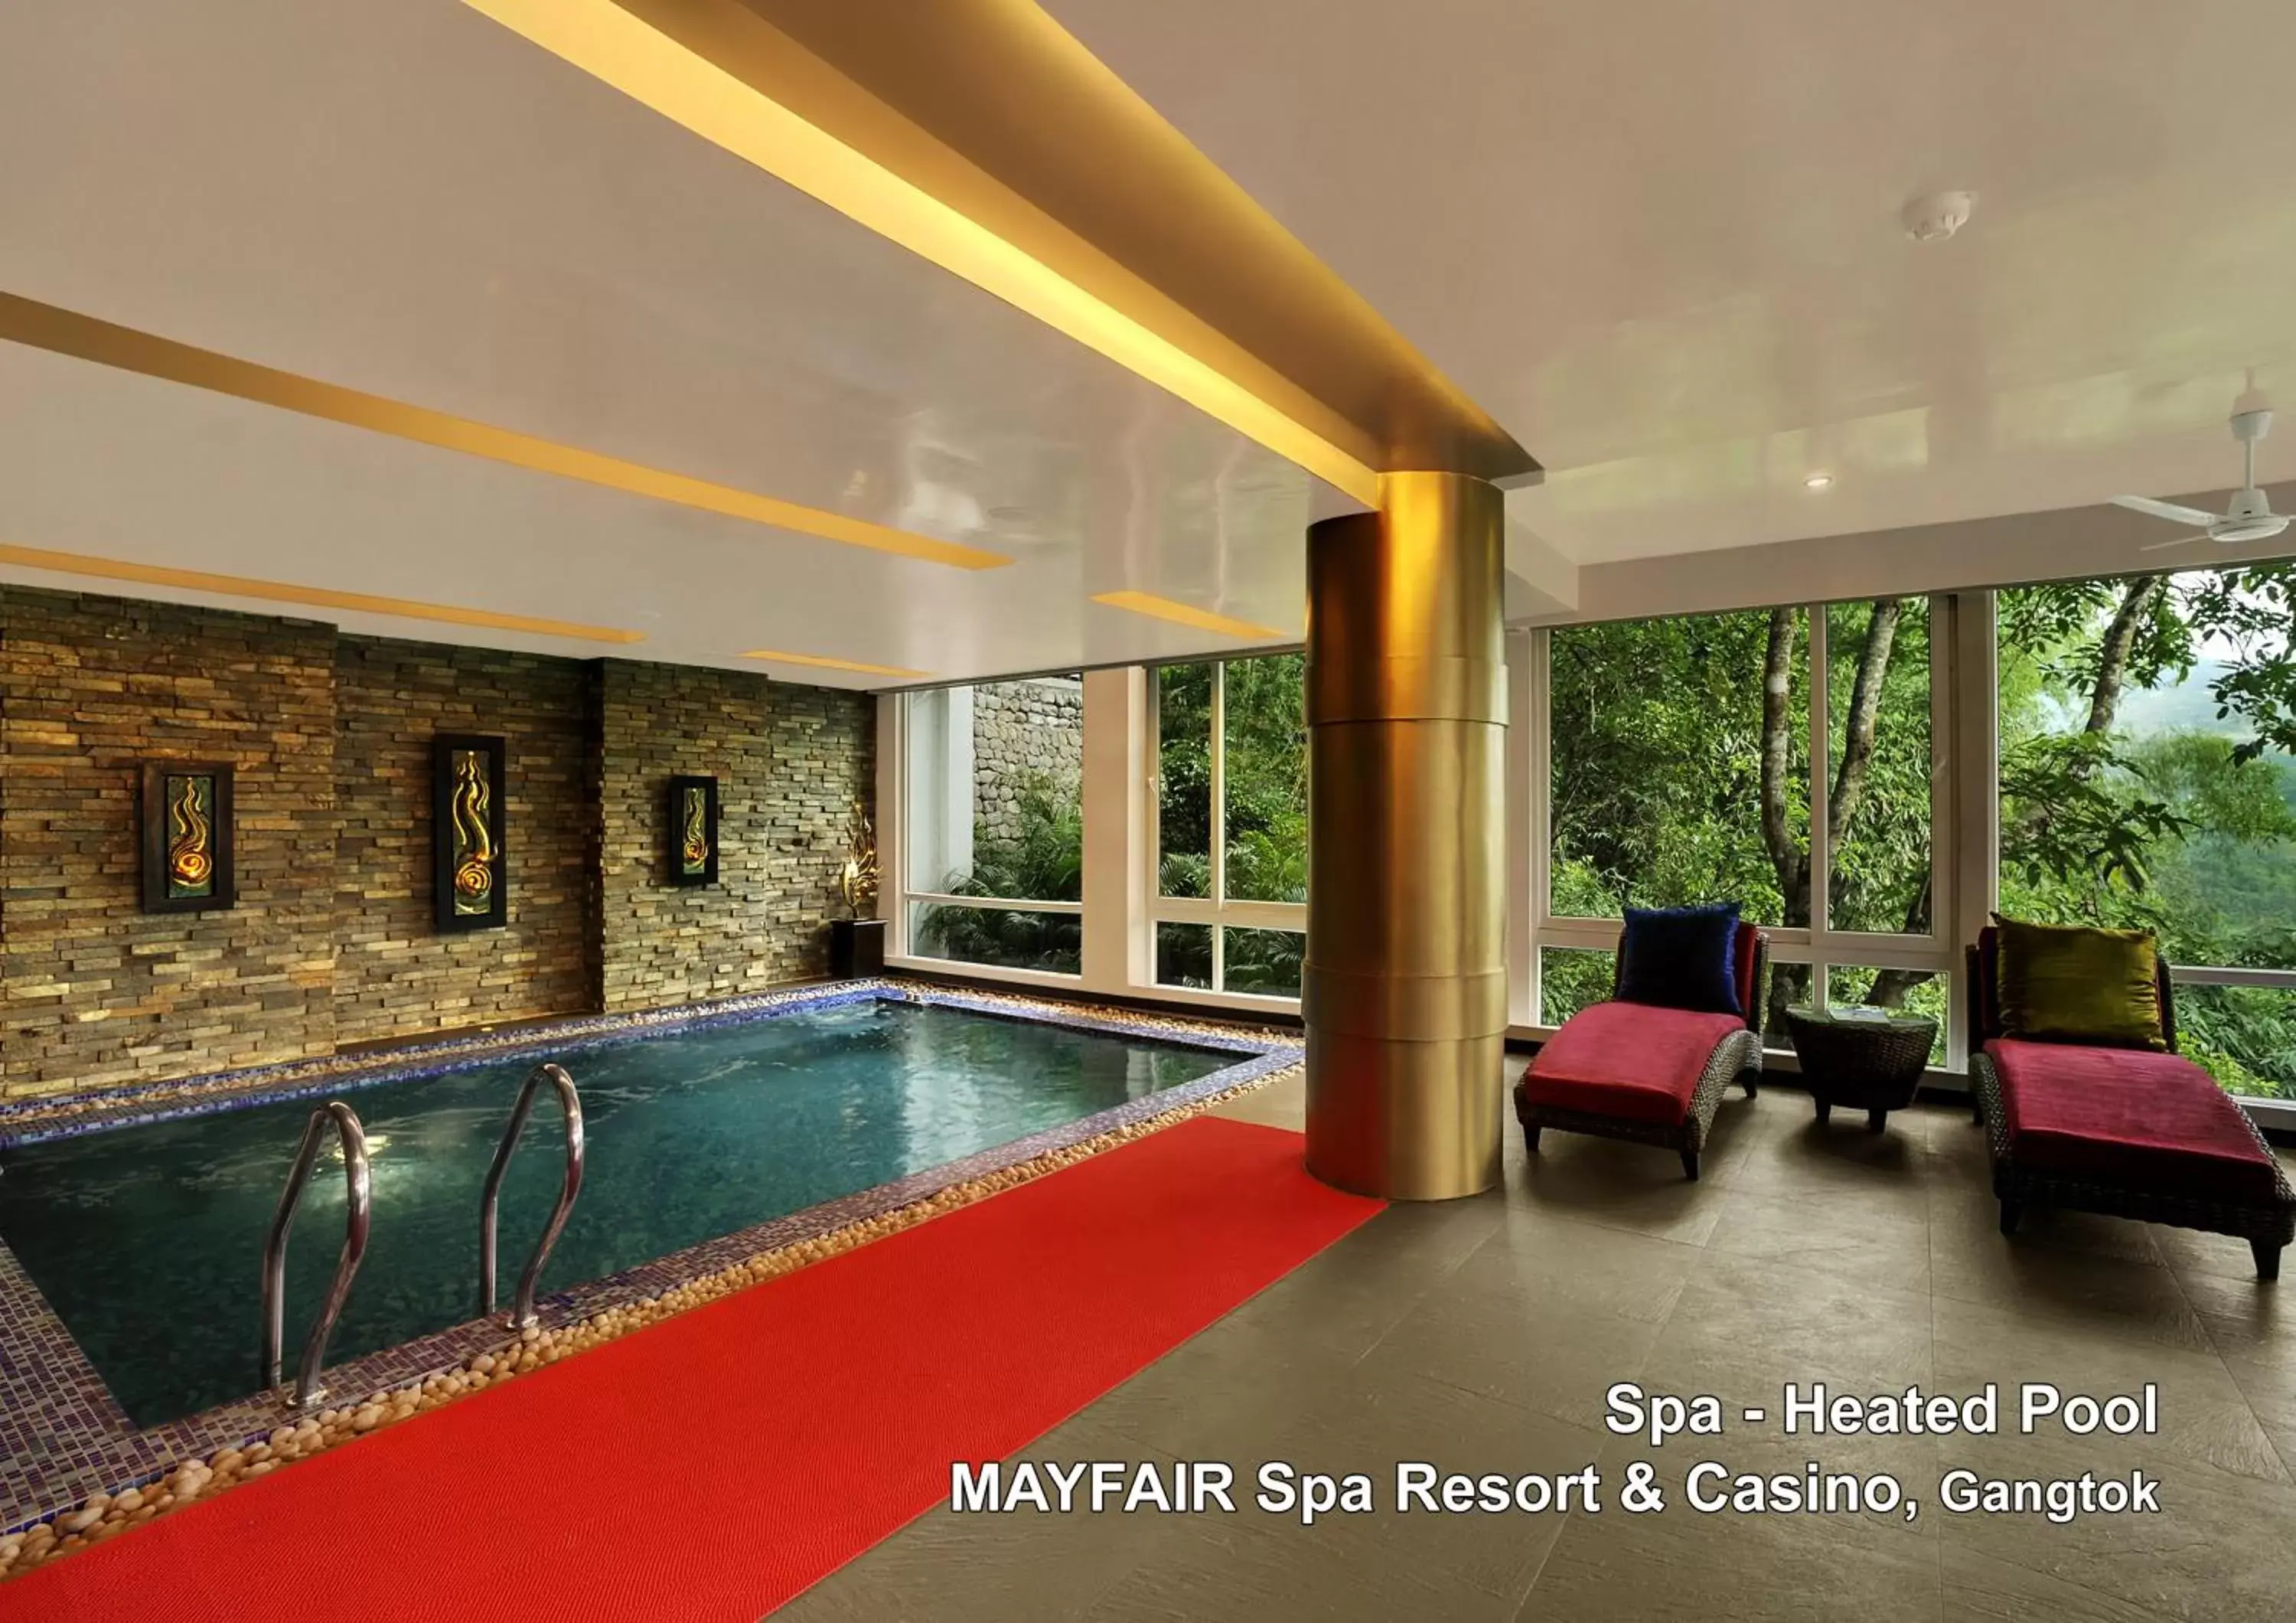 Day, Swimming Pool in Mayfair Spa Resort & Casino